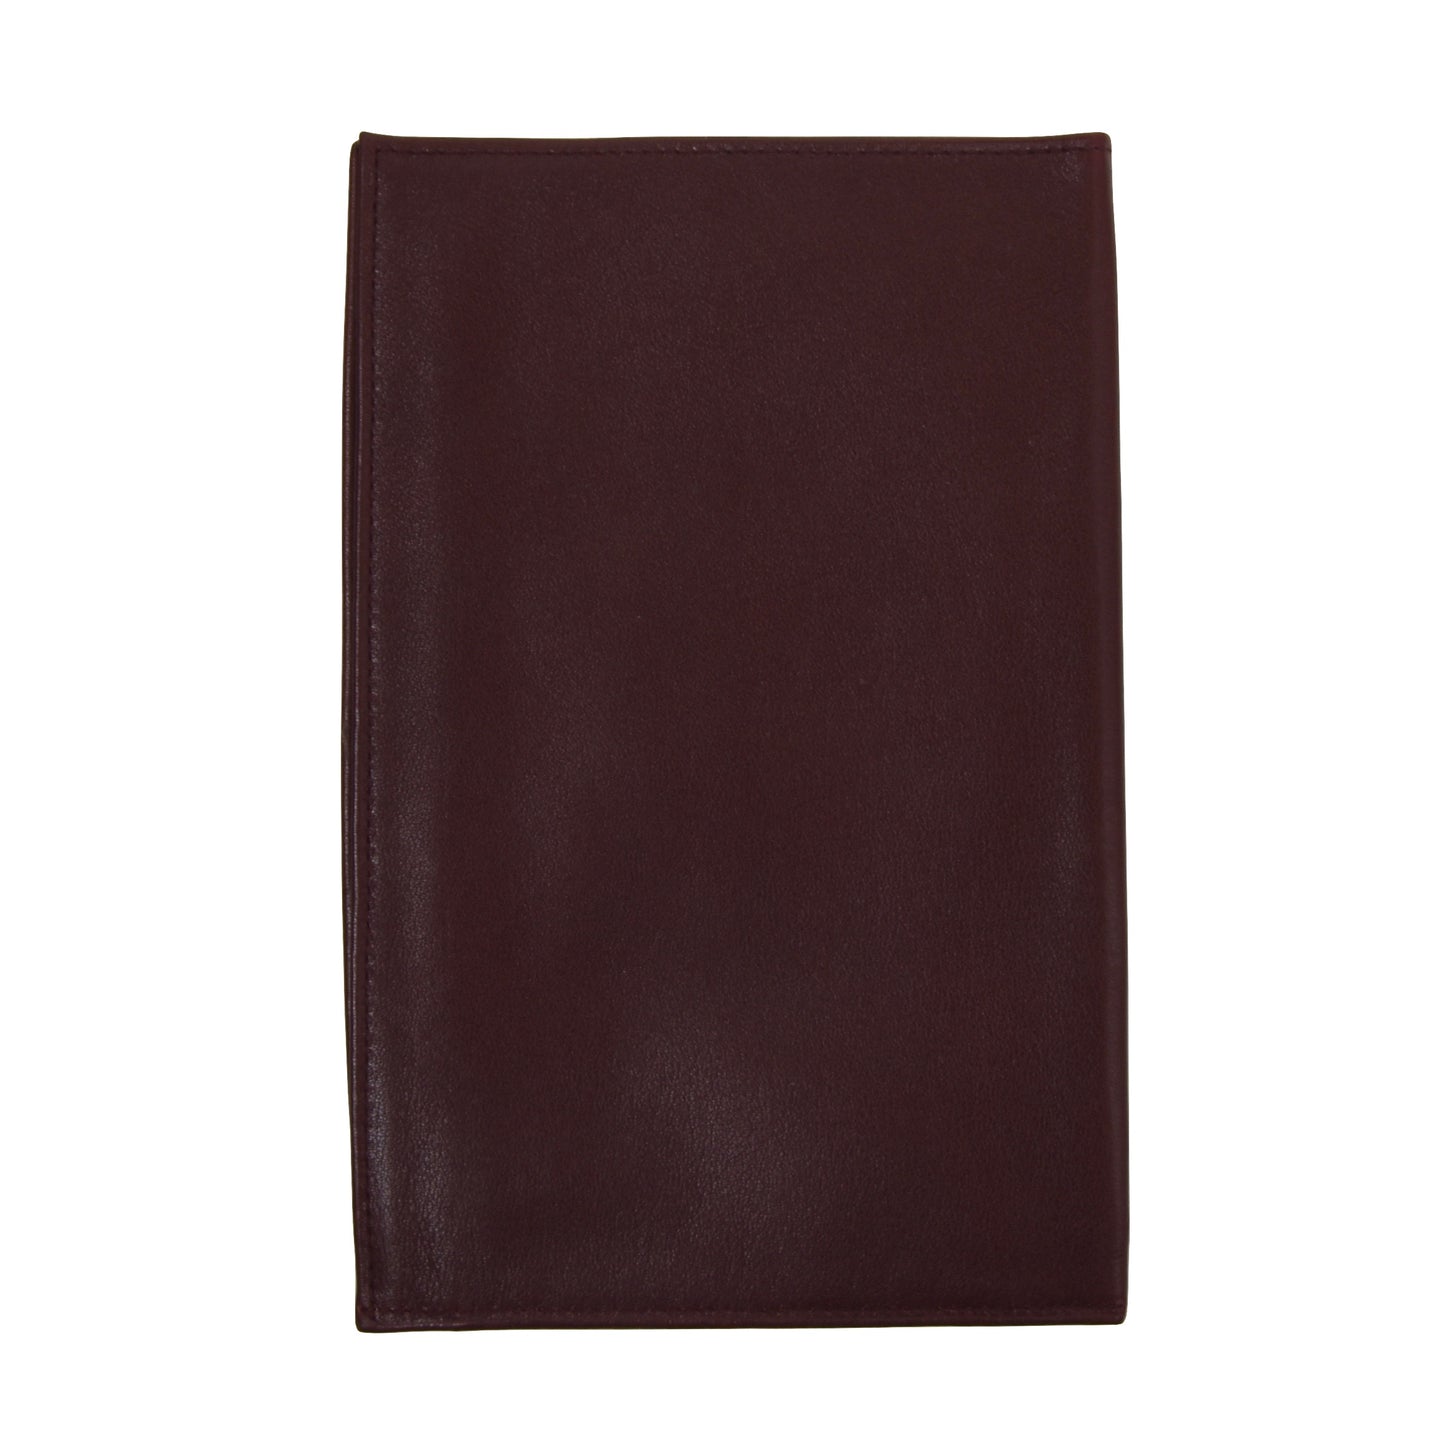 Becker Handmade Leather Passport Case/Wallet - Burgundy